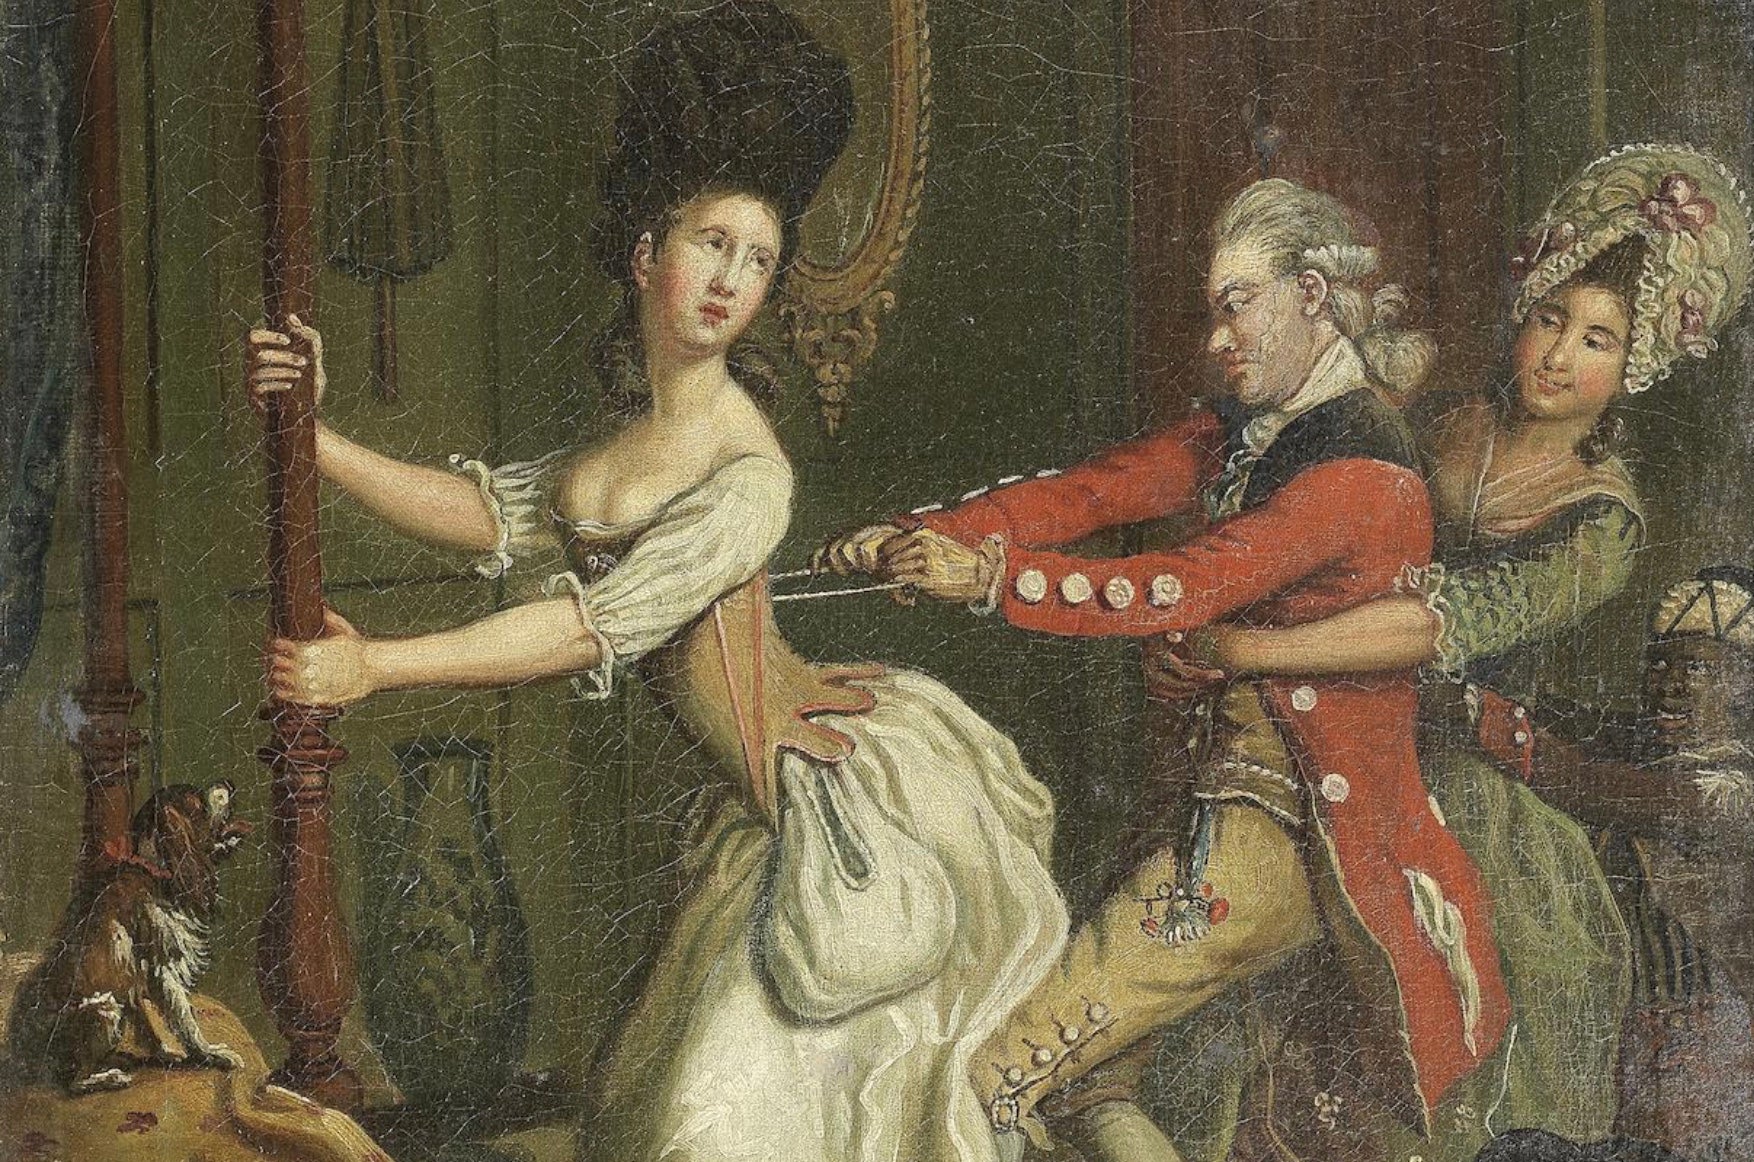 18th Century Stays  18th century fashion, Historical dresses, Undergarment  fashion